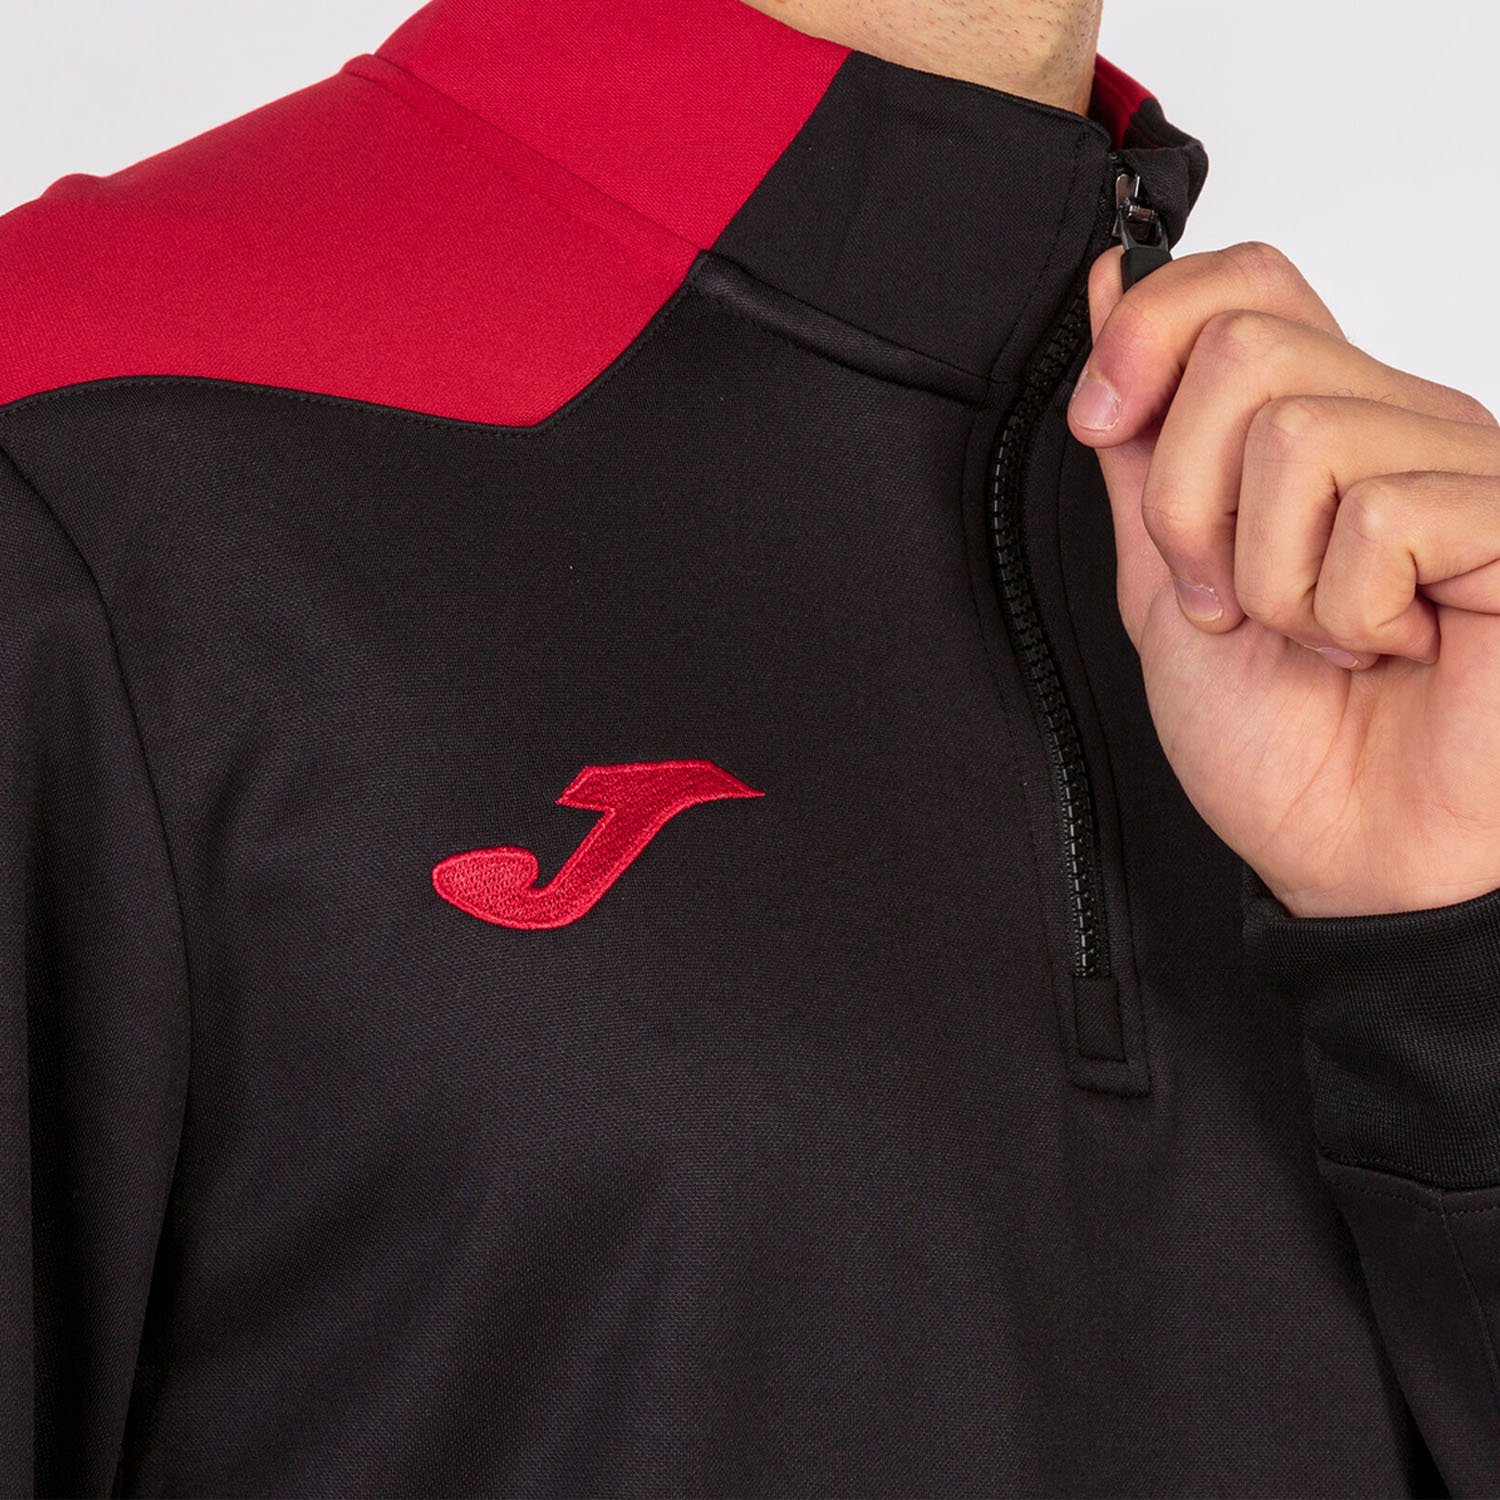 Joma Championship VI Shirt - Black/Red